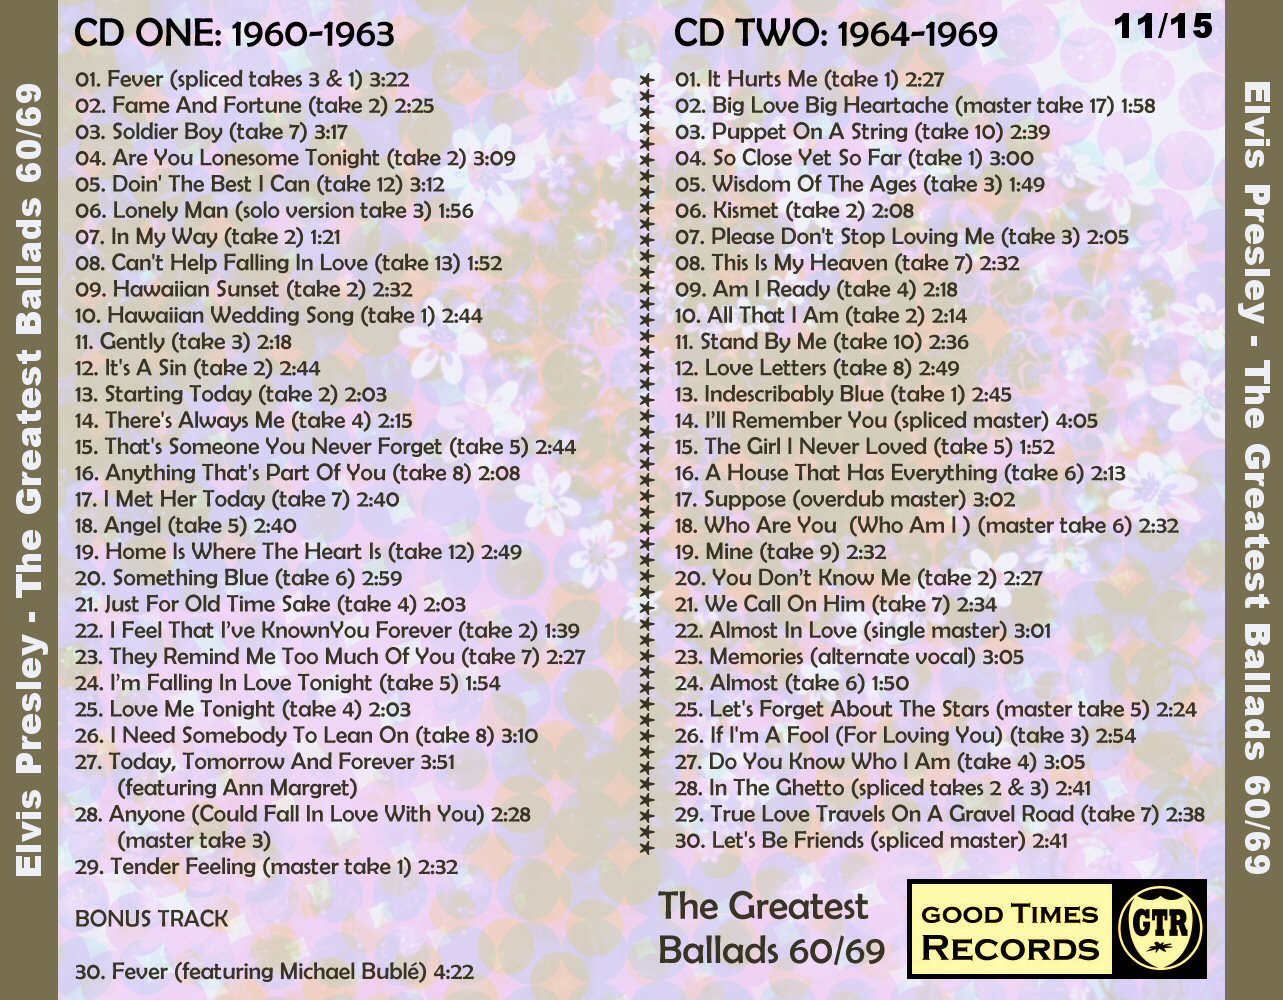 The Greatest Ballads 1960-1969